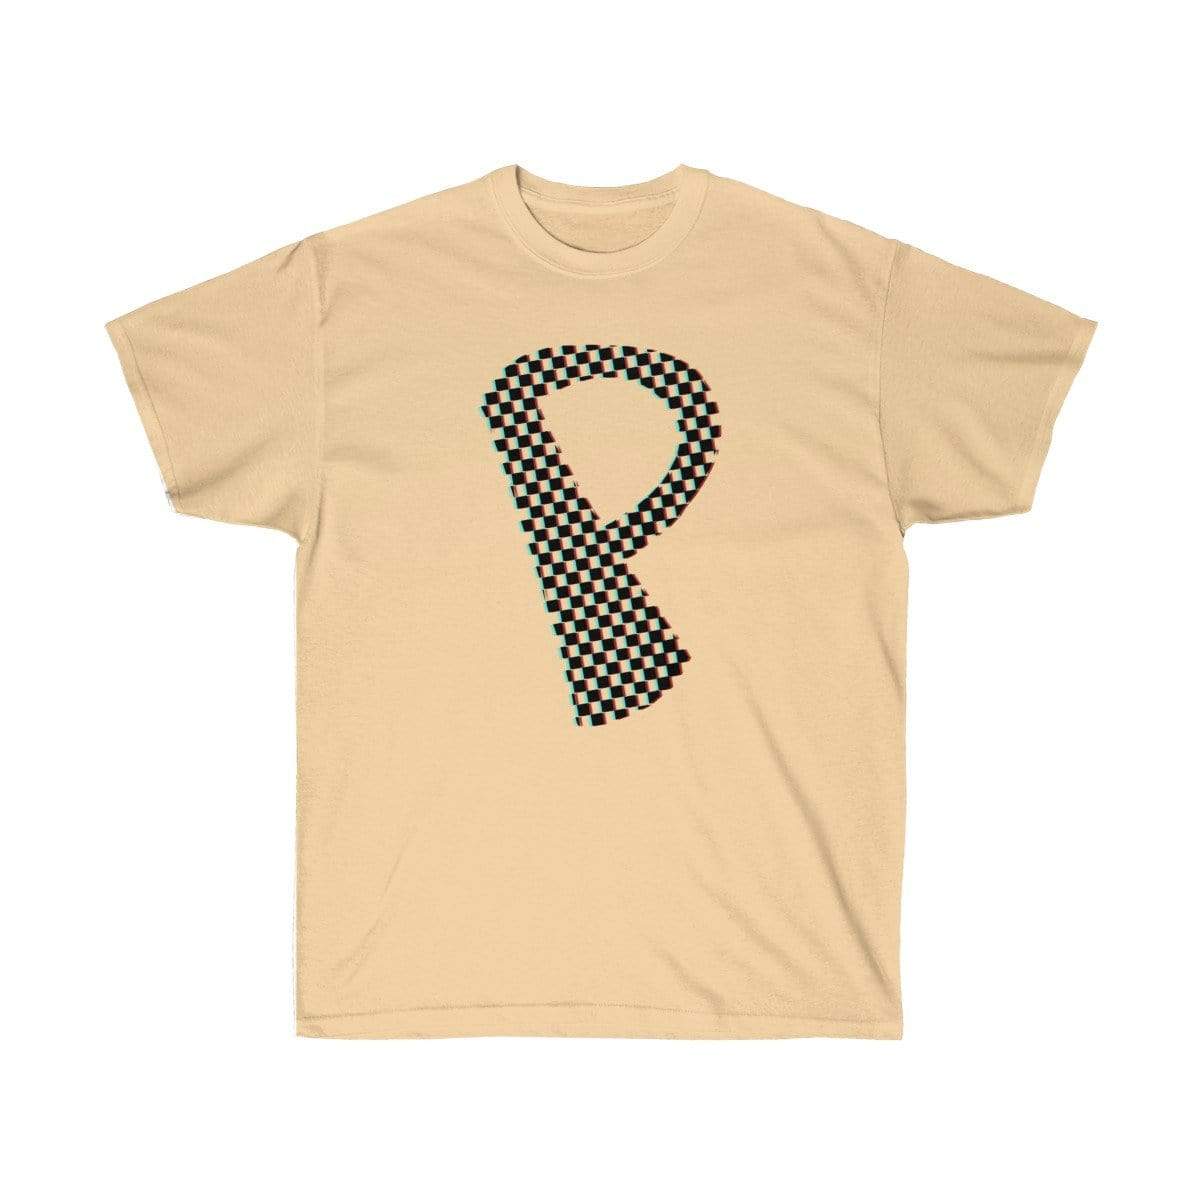 Plumskum T-Shirt Vegas Gold / S Dark Checkered, Glitchy, Capital P T-Shirt